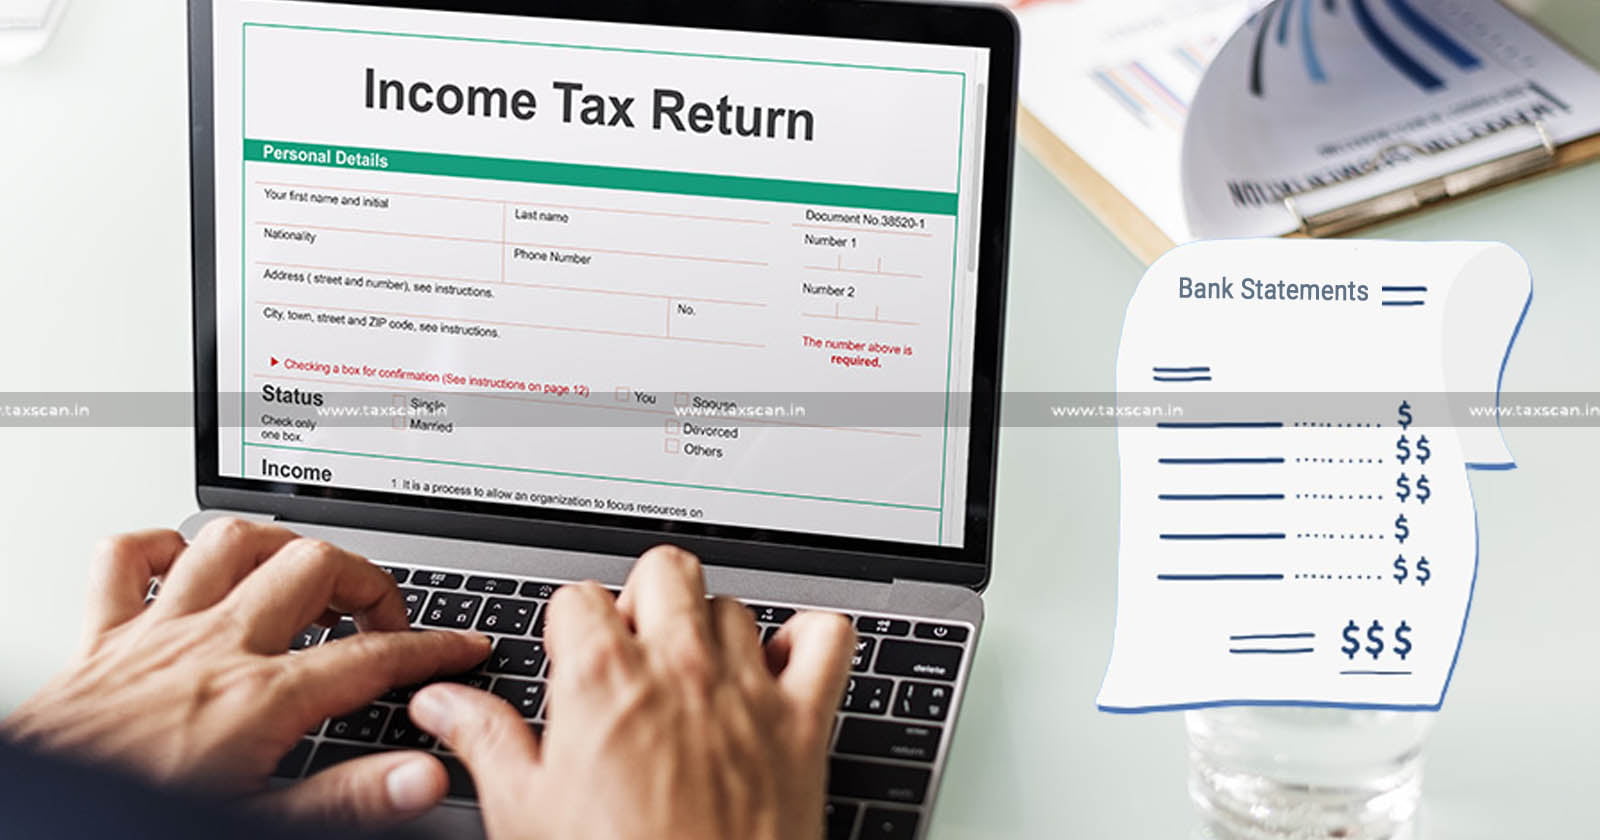 Furnishing of Income Tax Returns - Income Tax Returns - Income Tax - Bank Statements - Deposits - ITAT - Taxscan